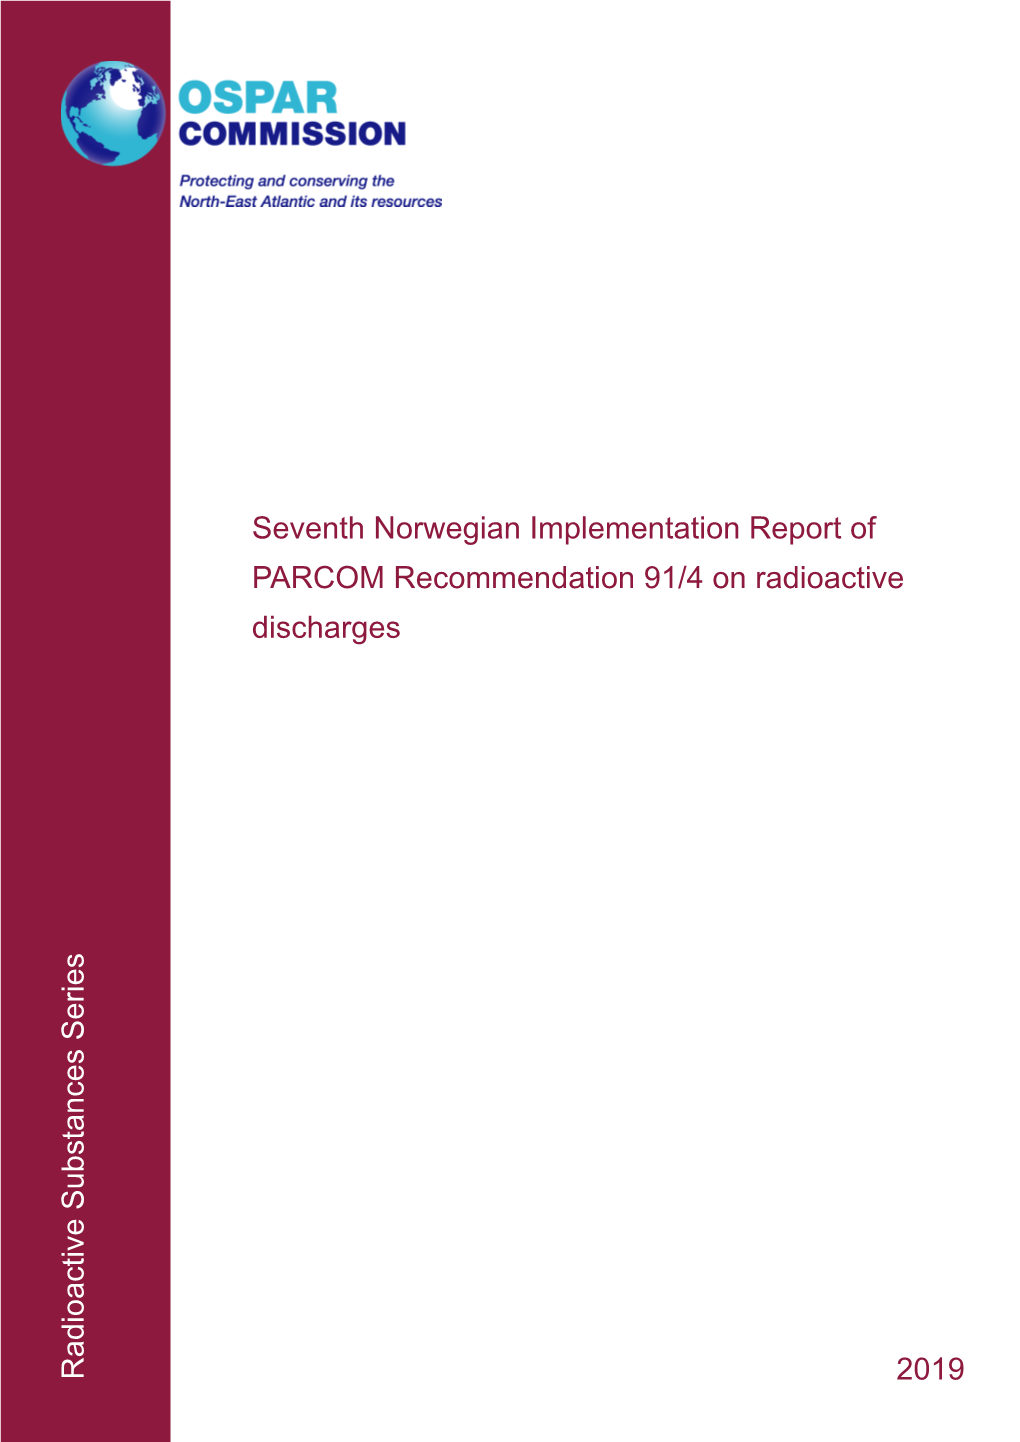 Seventh Norwegian Implementation Report of PARCOM